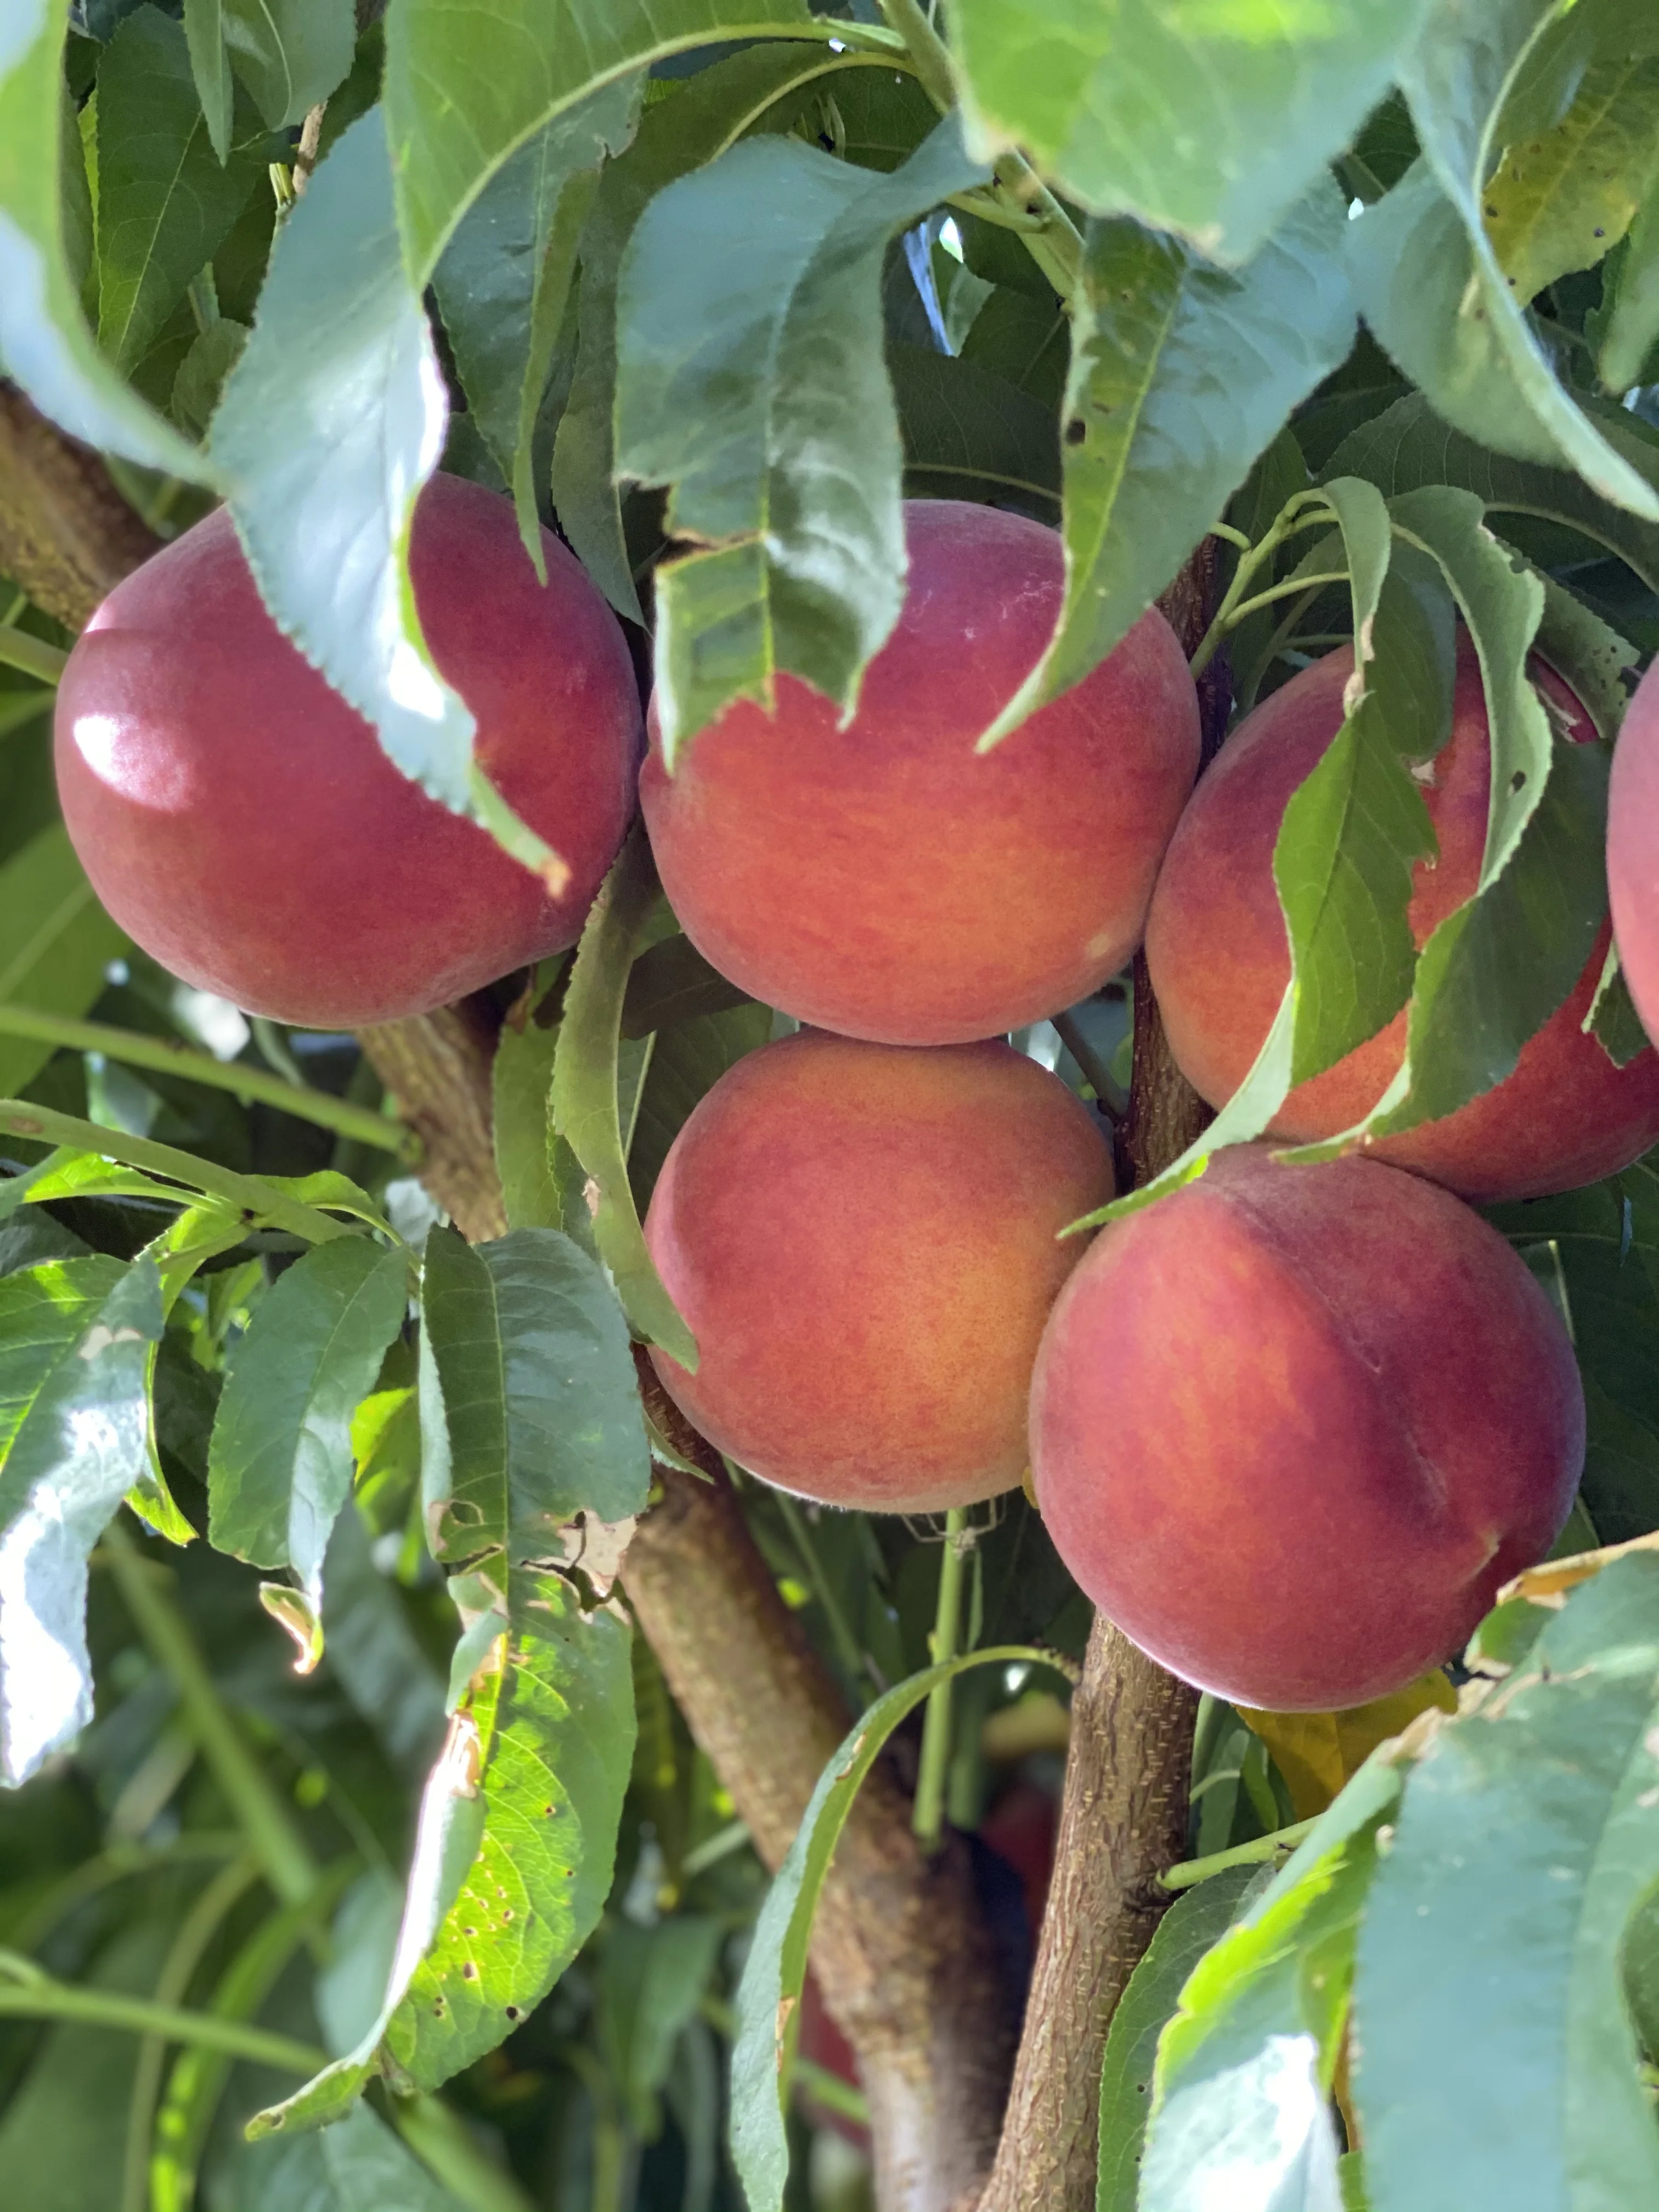 Premium Factory Supply Variety Size Grade Product Nectarines Fruit Taste Maturity Juicy Sweet Style Fresh Peaches